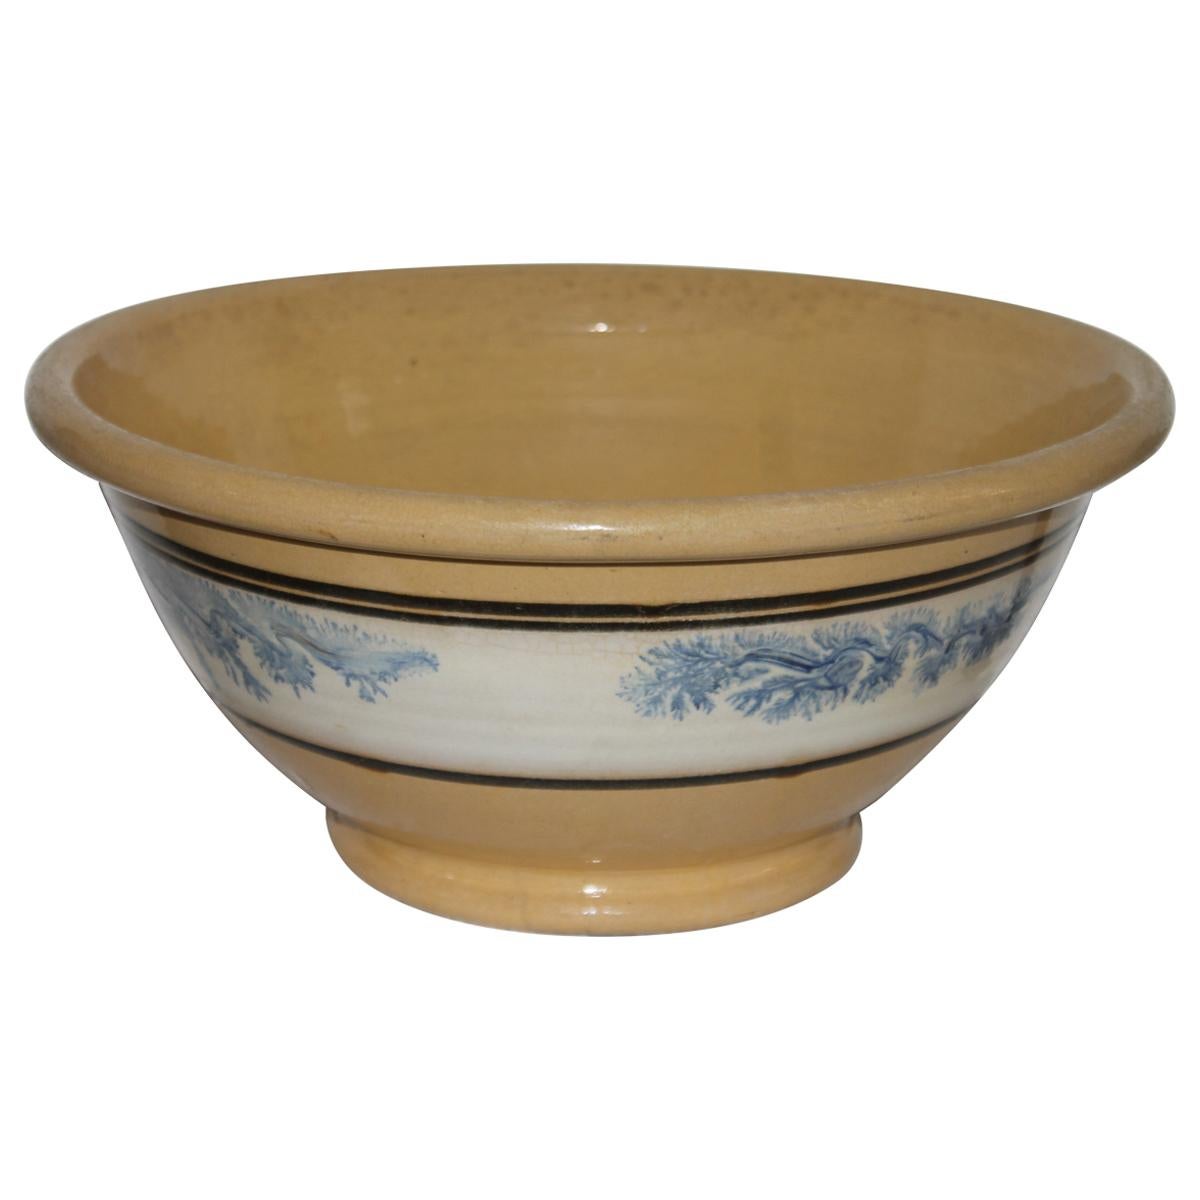 19th Century Monumental Mocha Yellow Ware Mixing Bowl